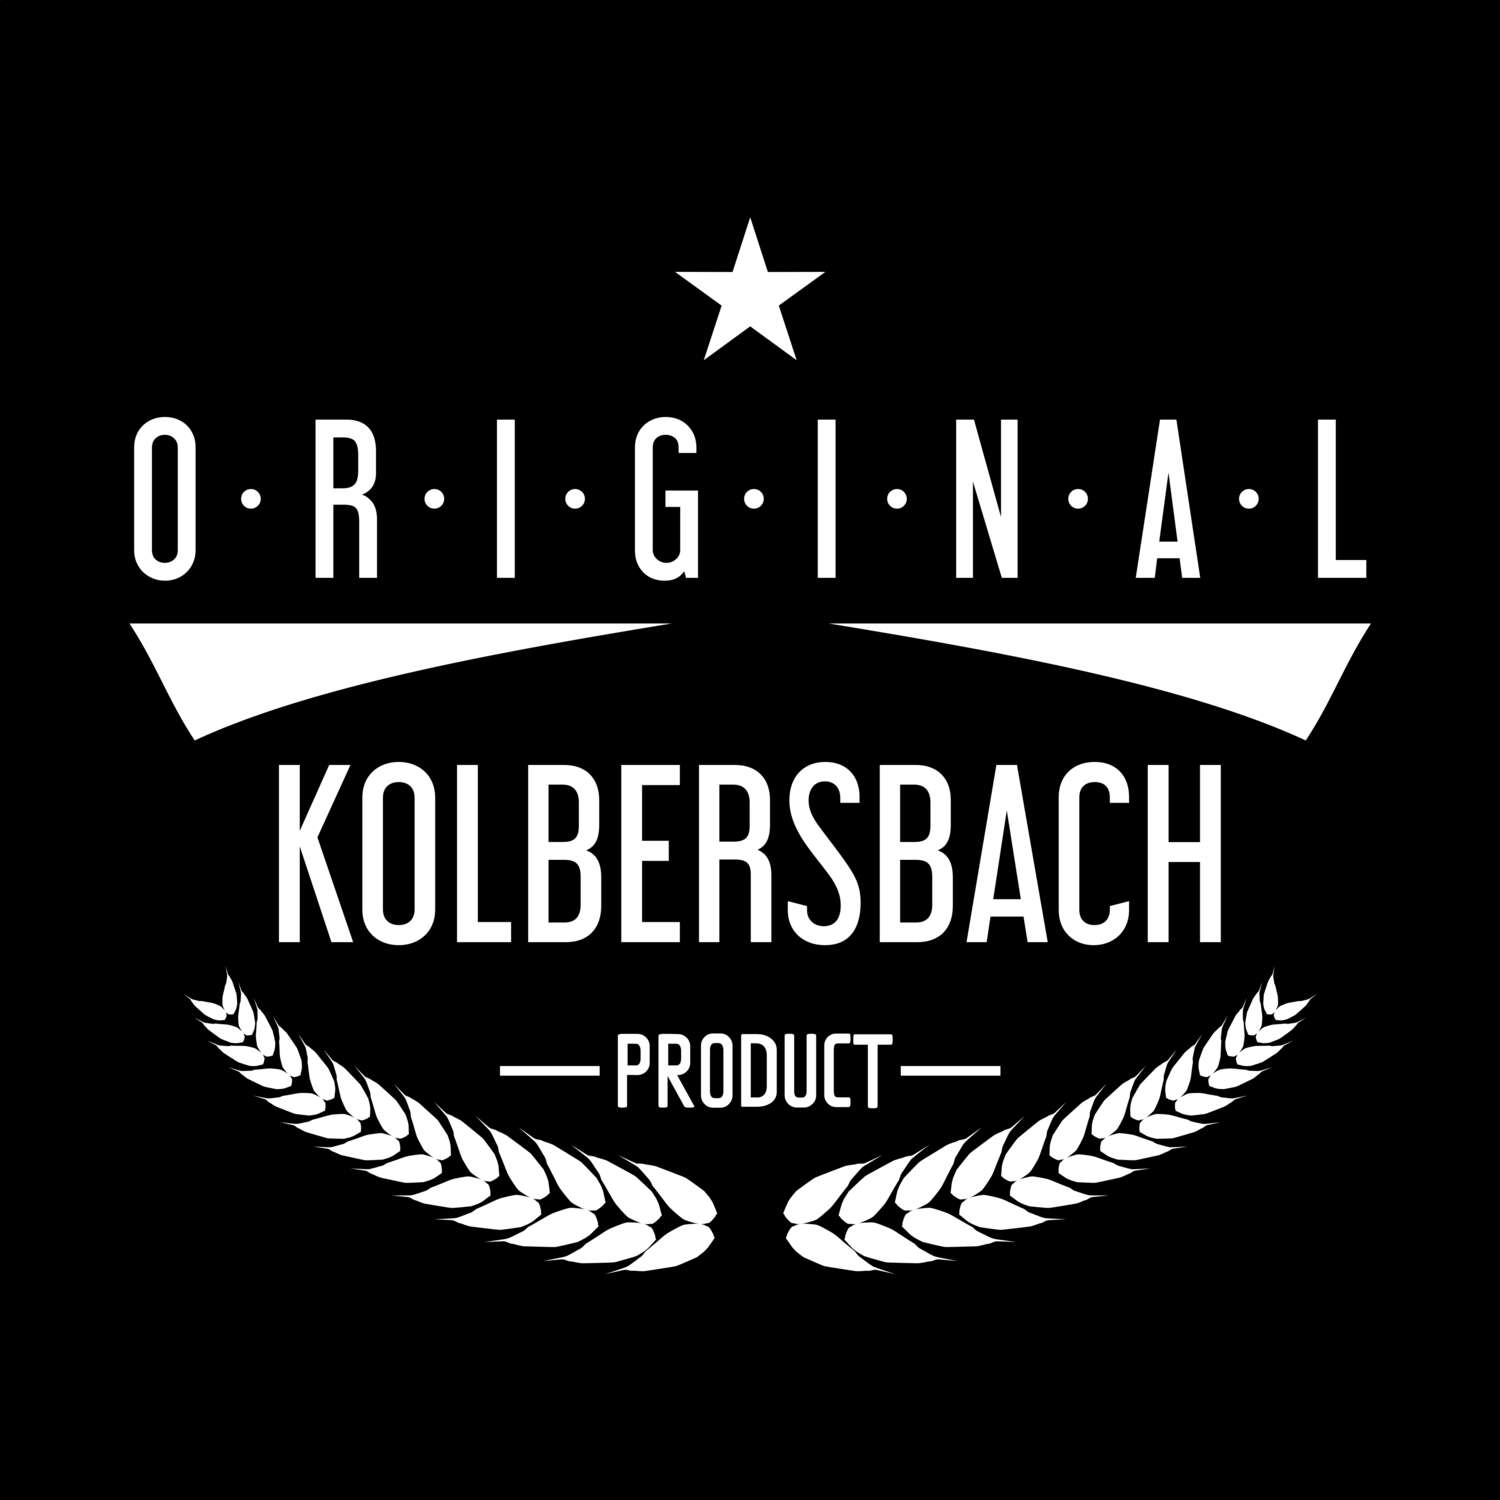 Kolbersbach T-Shirt »Original Product«